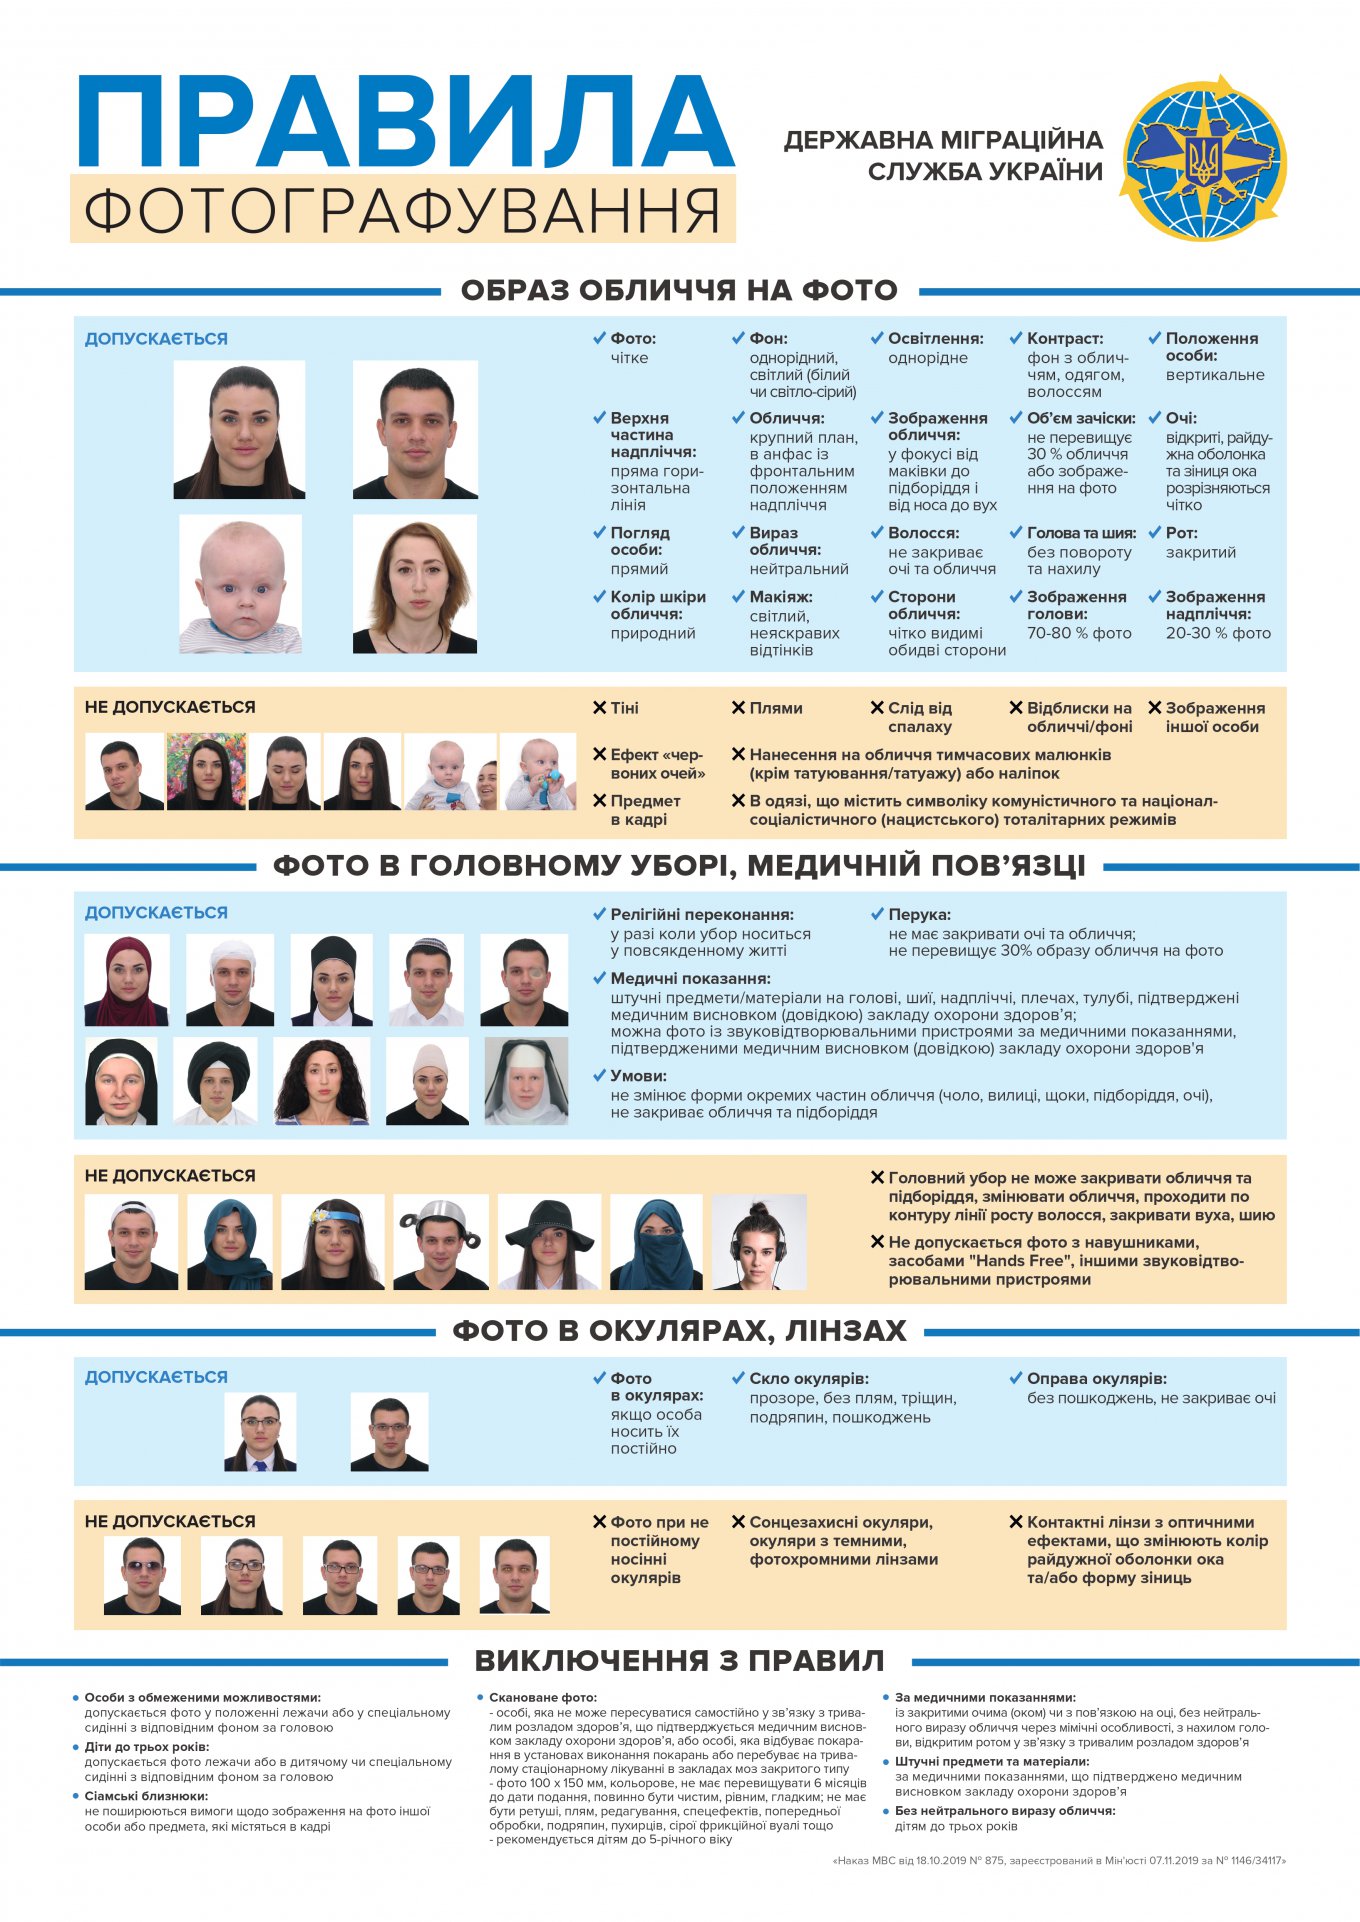 Новые требования к фото на биометрический паспорт (фото: dmsu.gov.ua)